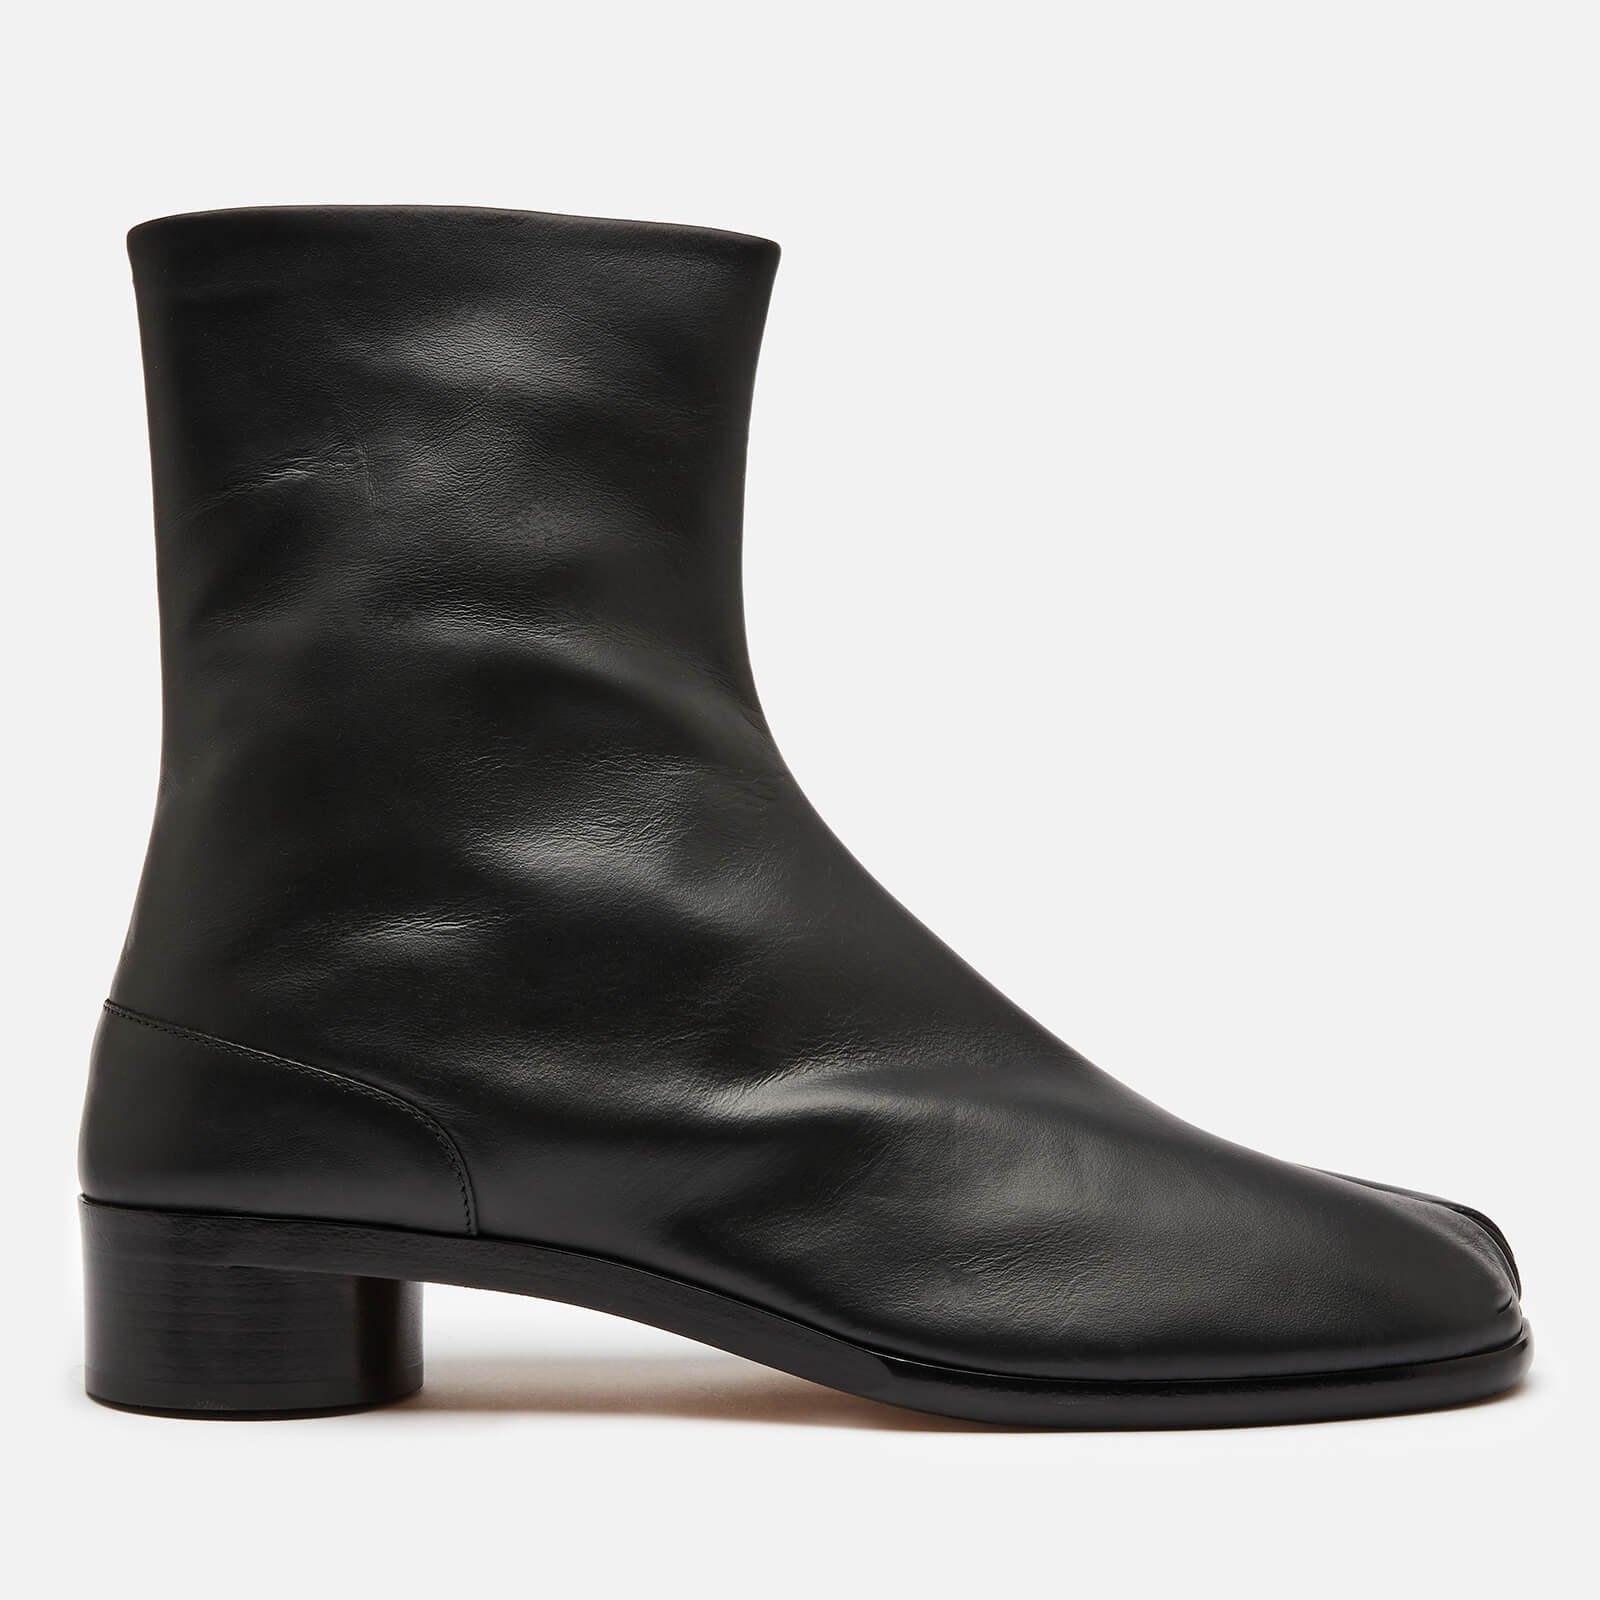 Maison Margiela Men's Tabi Ankle 3cm Boots - Black - EU 41/UK 7